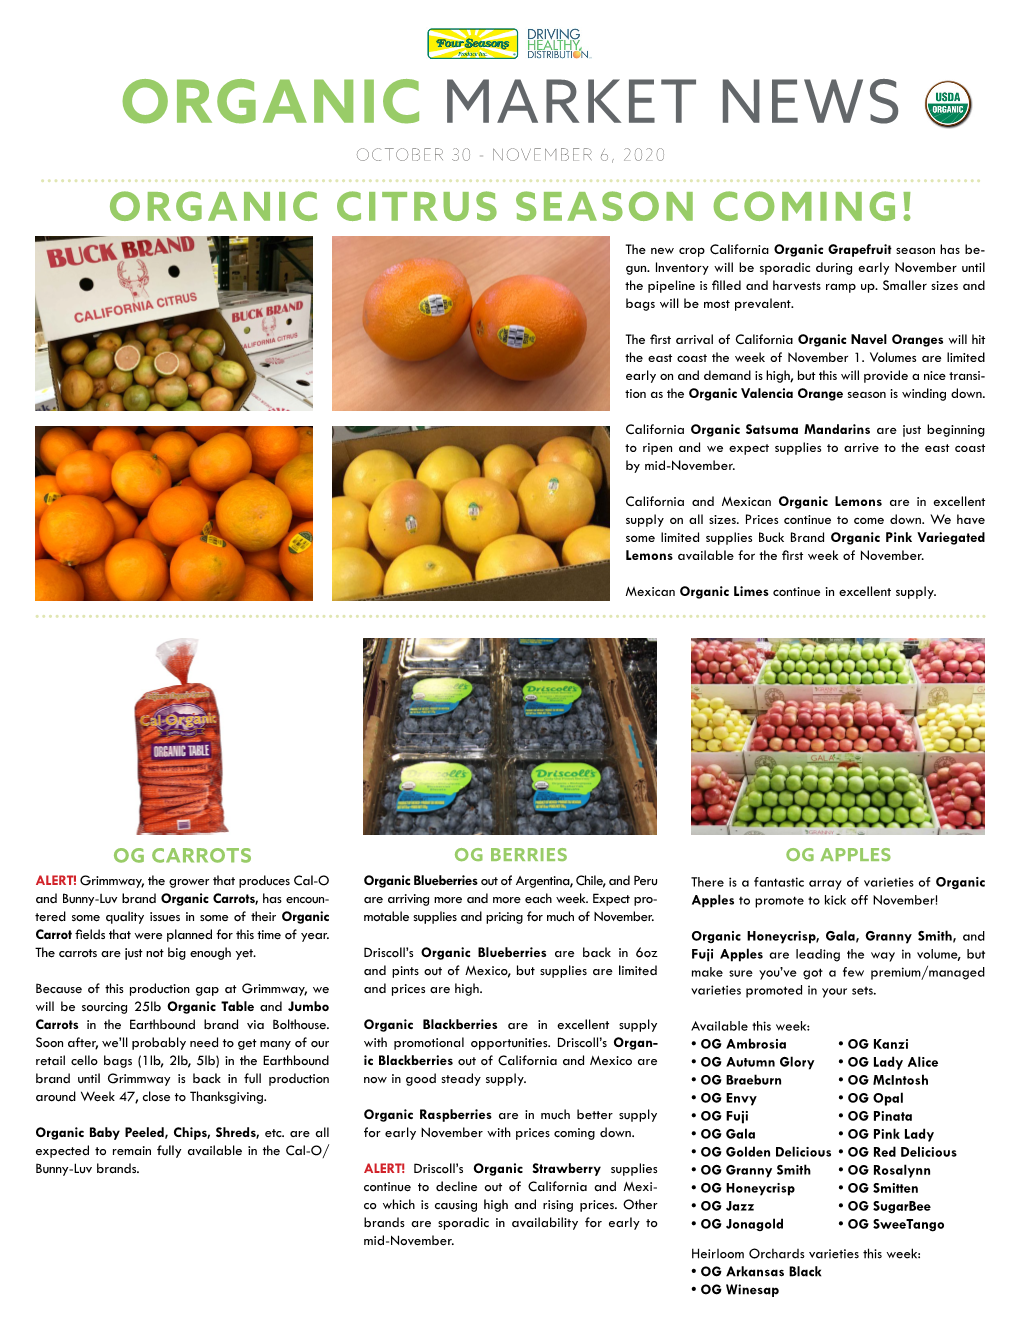 ORGANIC MARKET NEWS OCTOBER 30 - NOVEMBER 6, 2020 ORGANIC CITRUS SEASON COMING! the New Crop California Organic Grapefruit Season Has Be- Gun